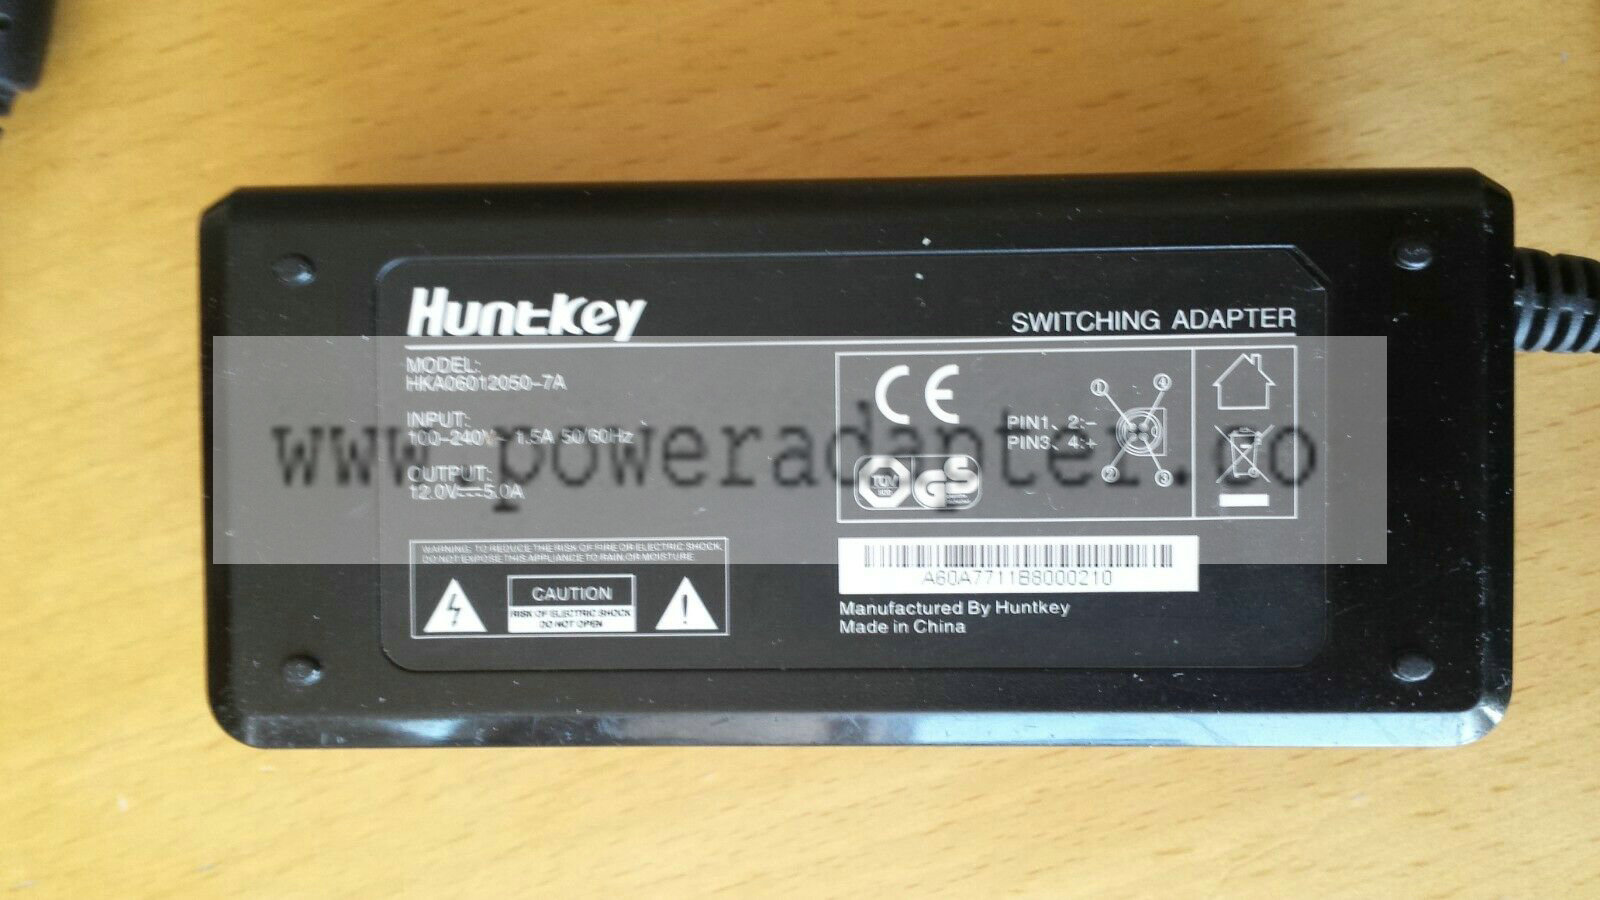 HuntKey adapter HKA06012050- 12V, 5A, 60W, 4 pin EAN: Does Not Apply Brand: HuntKey MPN: HKA06012050-7A Output Vo - Click Image to Close